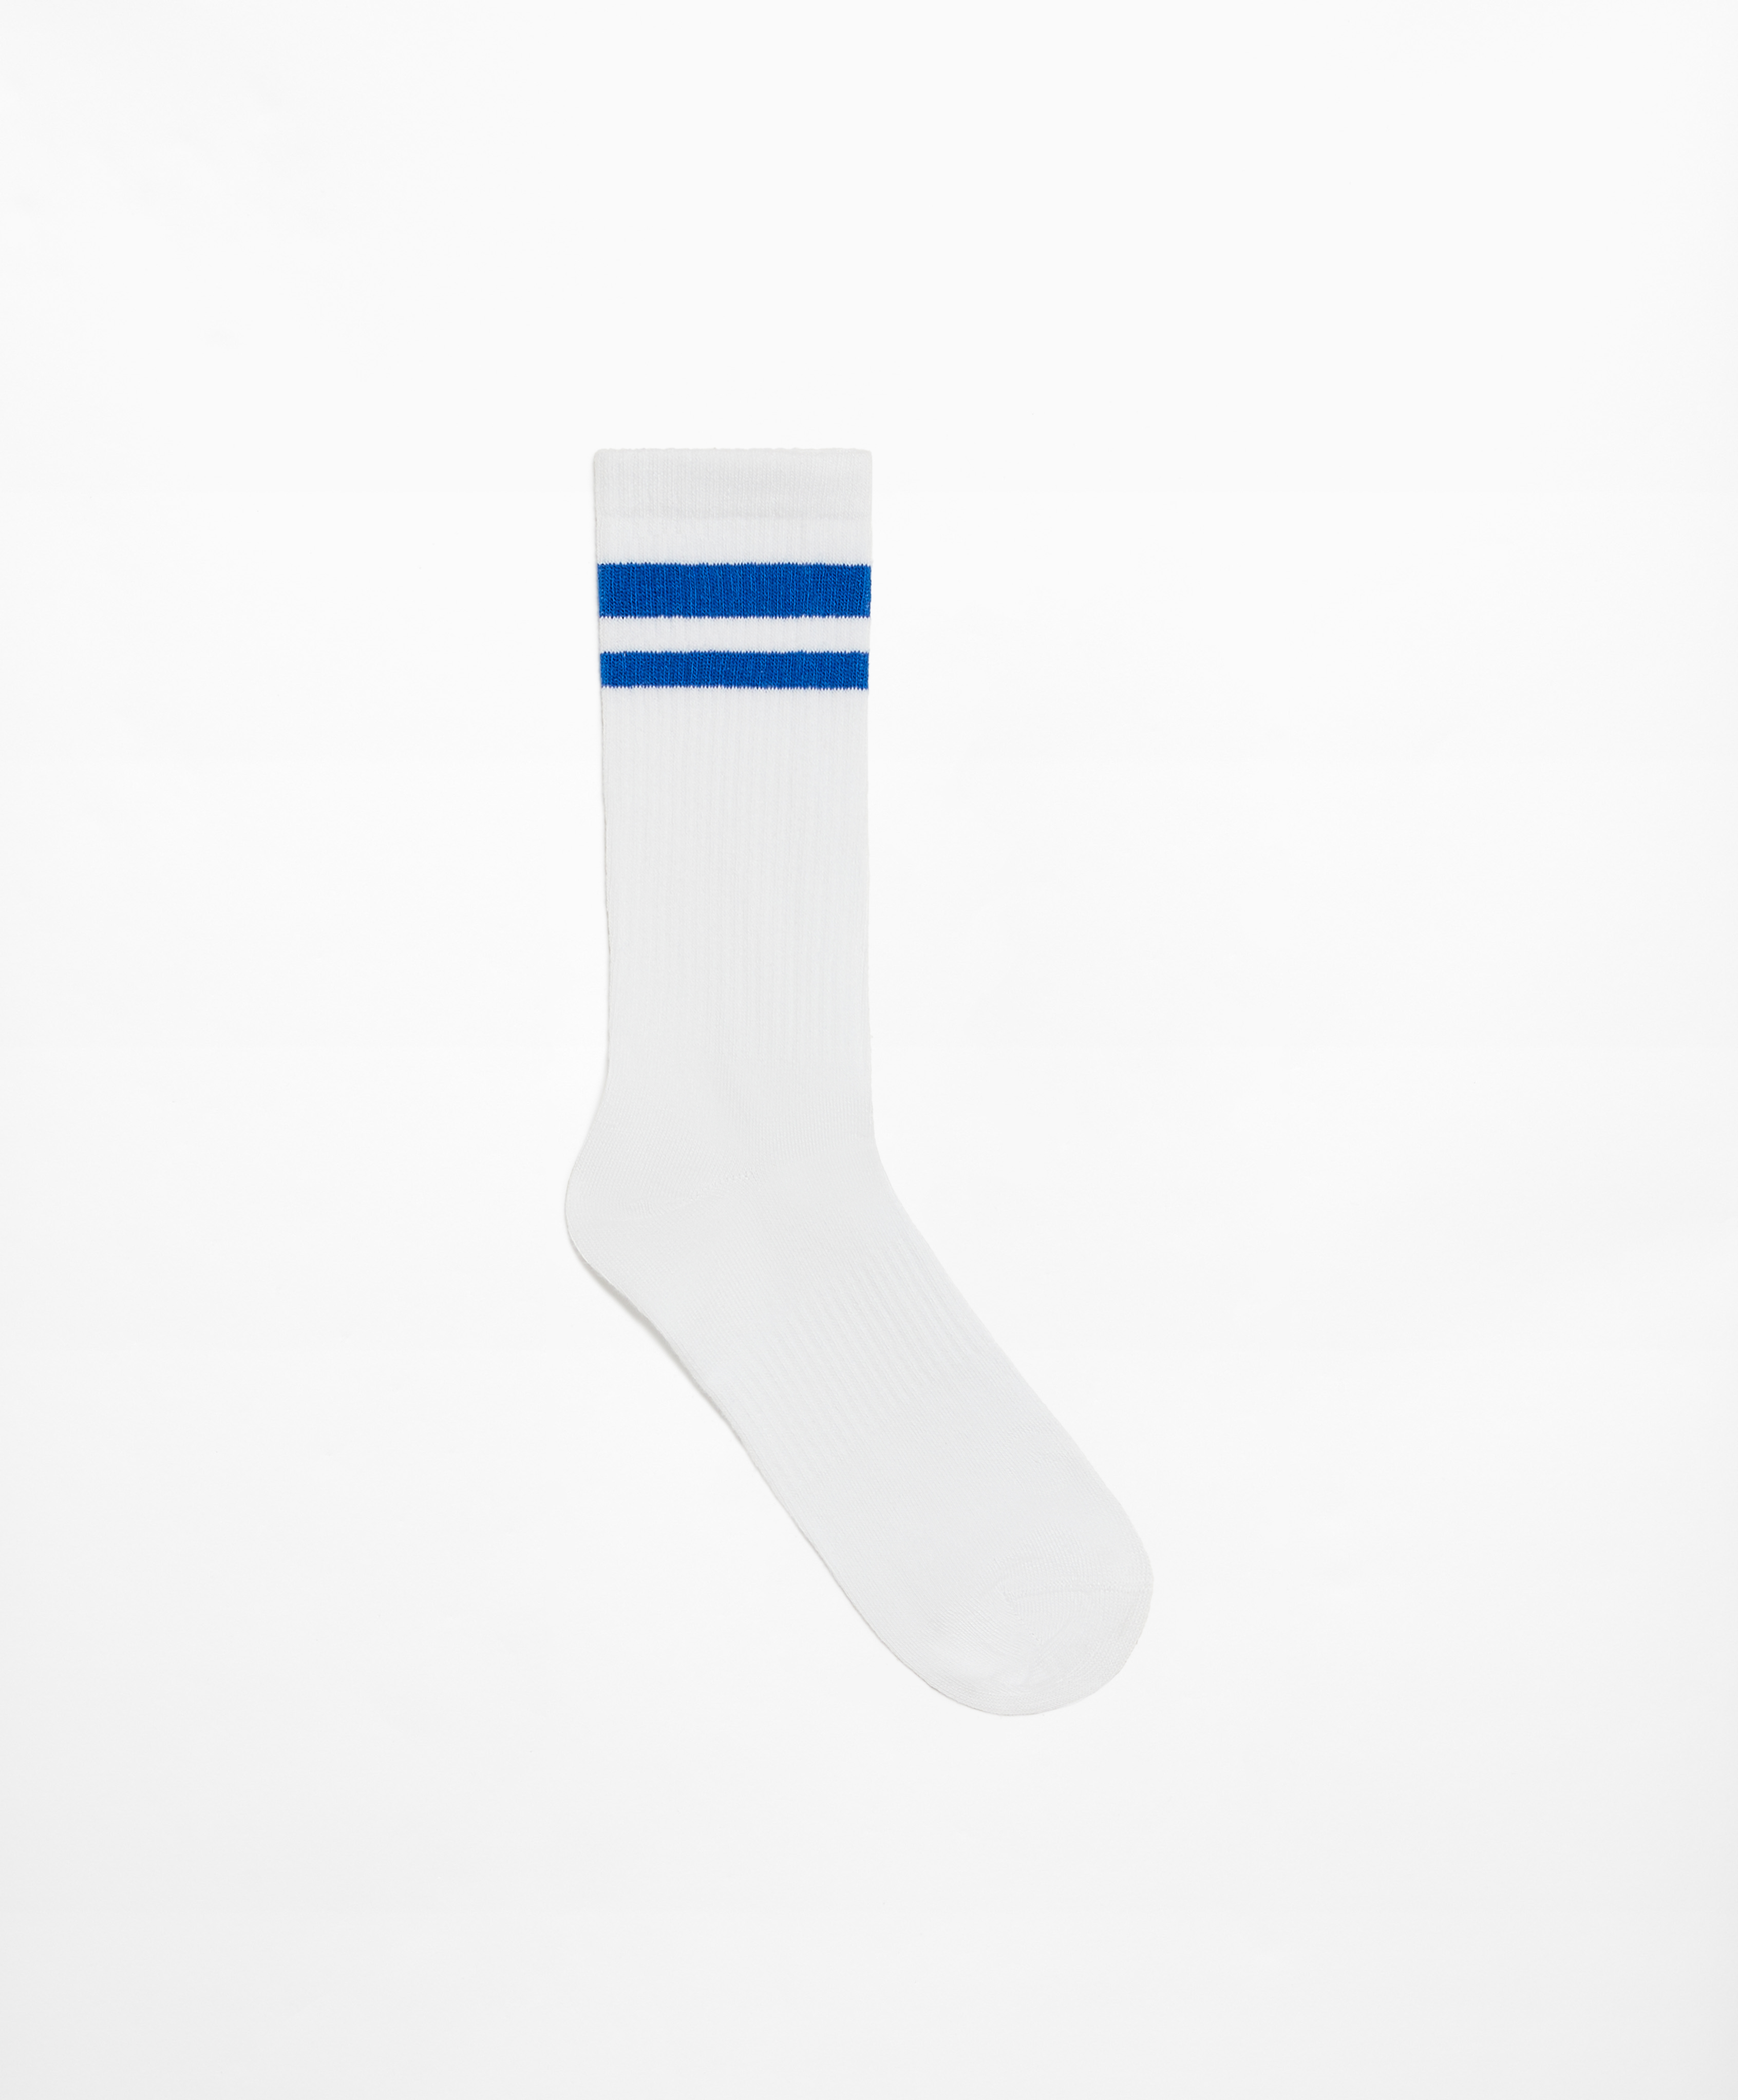 Stripe rib classic sports socks in a cotton blend